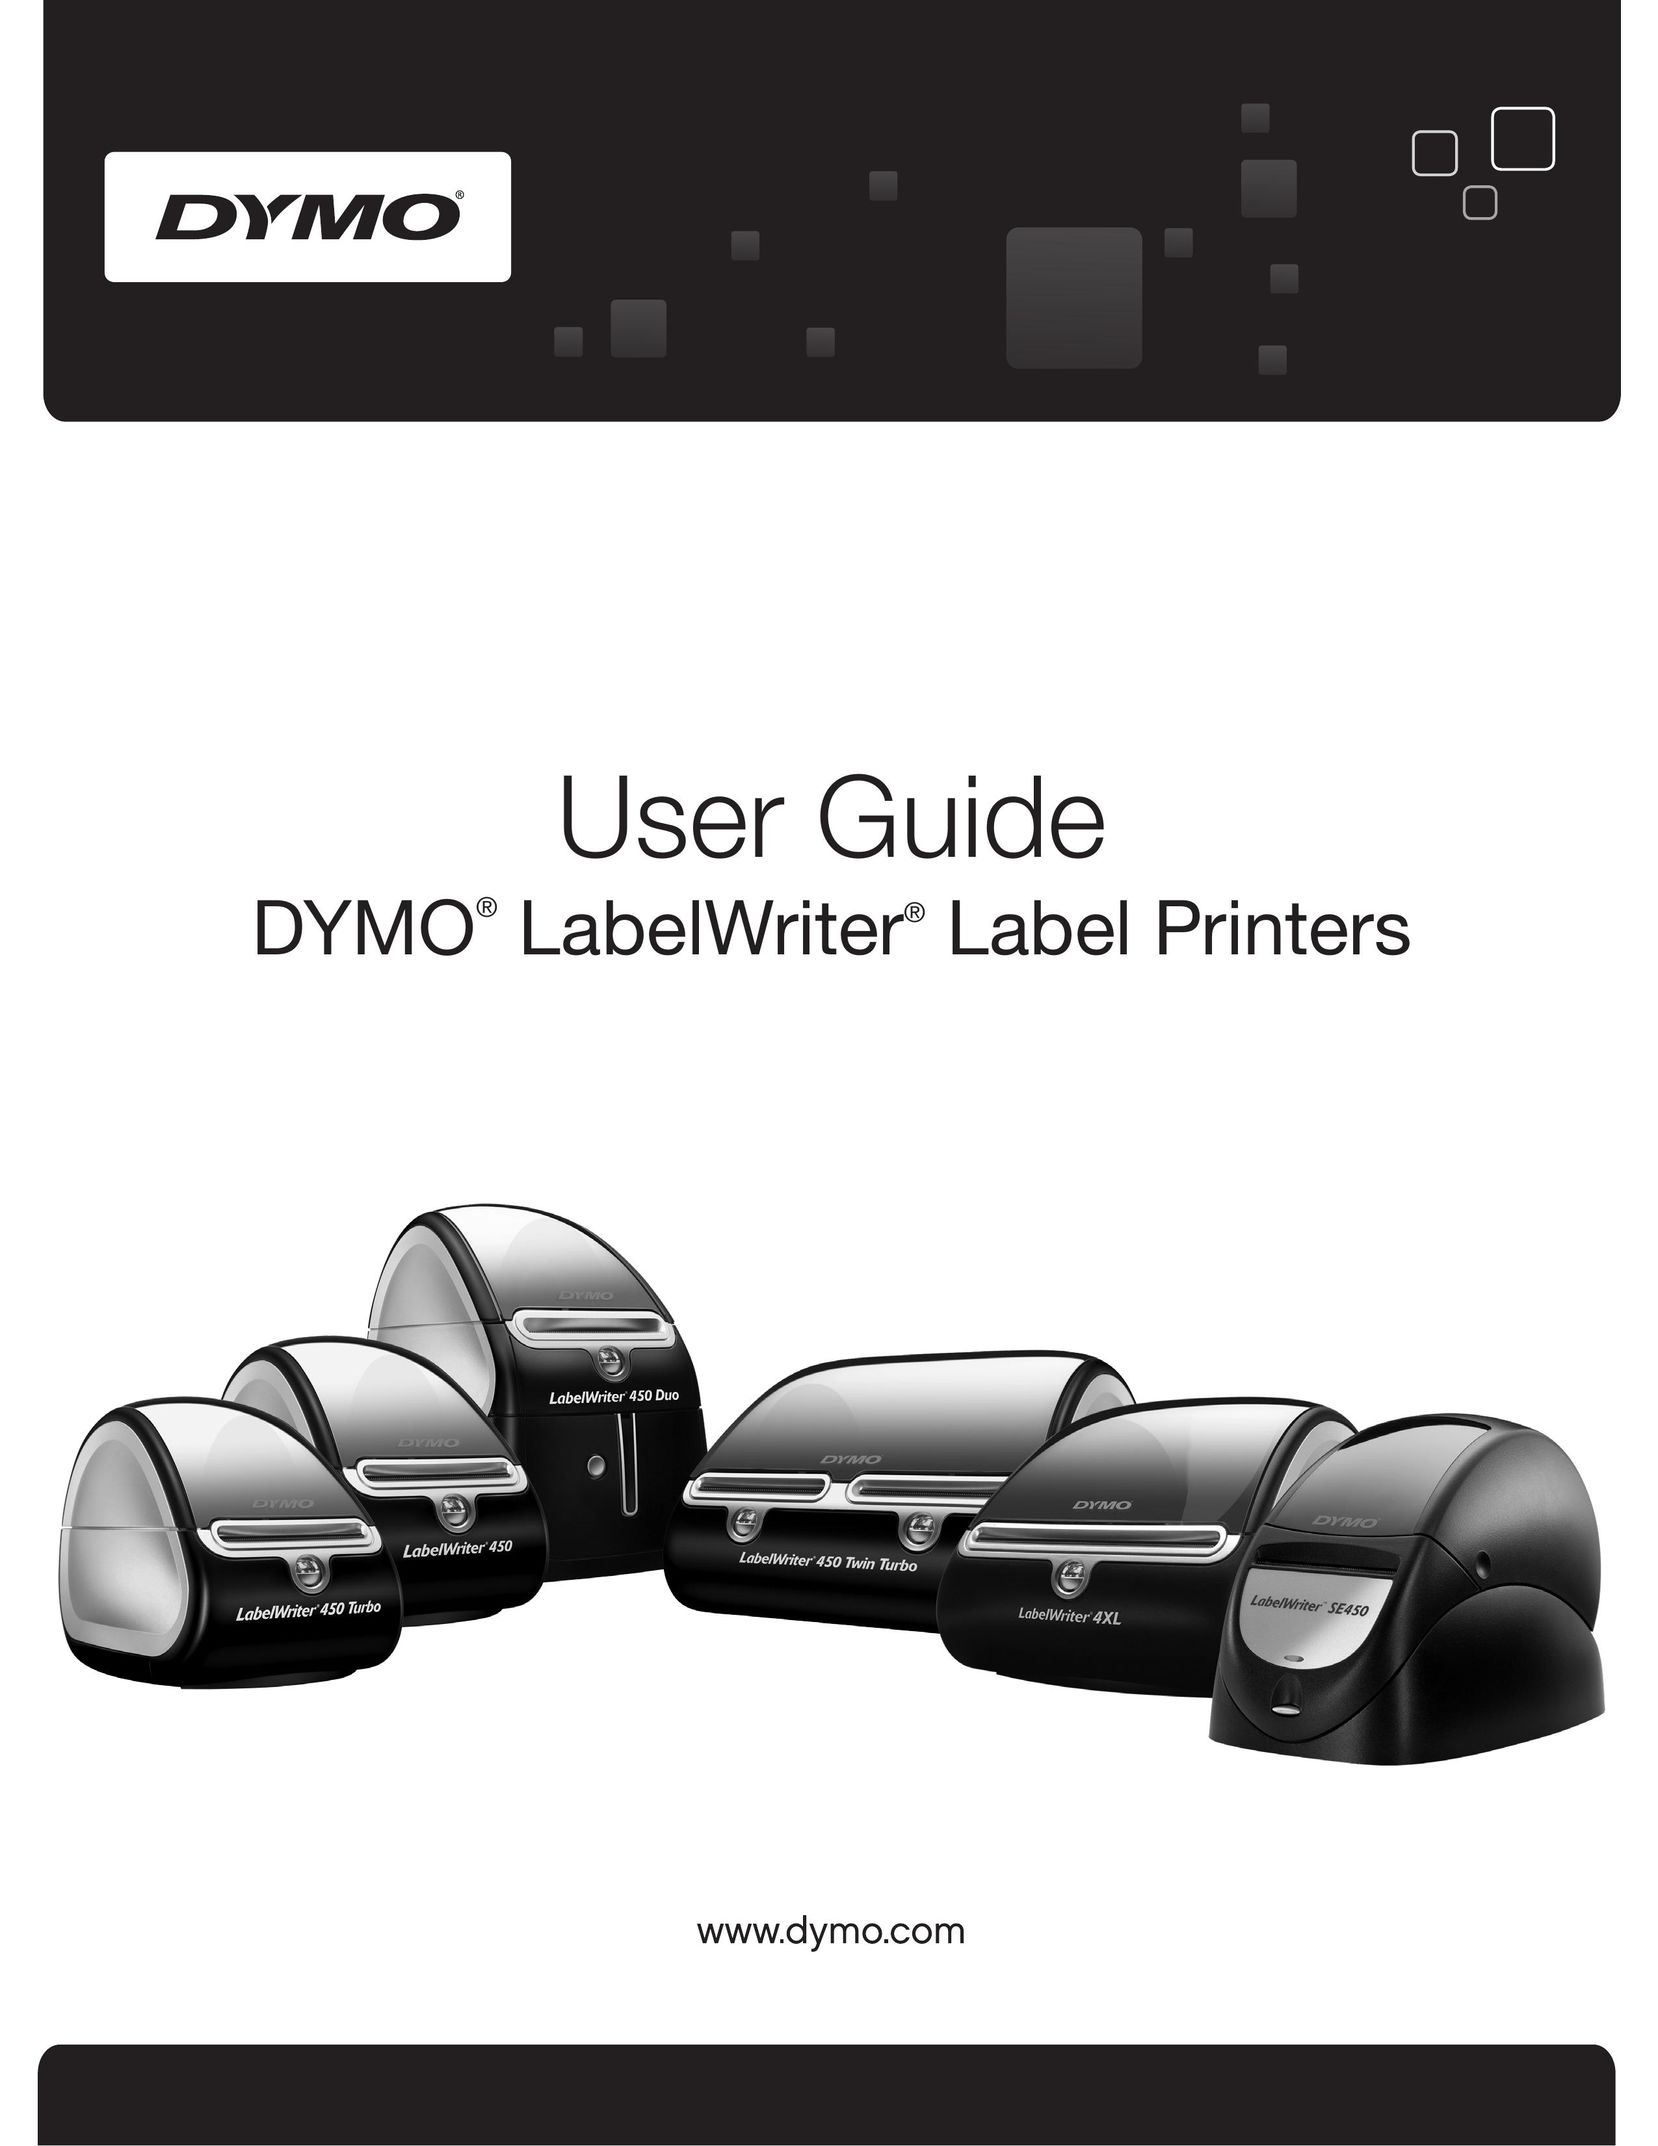 Dymo 450 Twin Turbo Label Maker User Manual